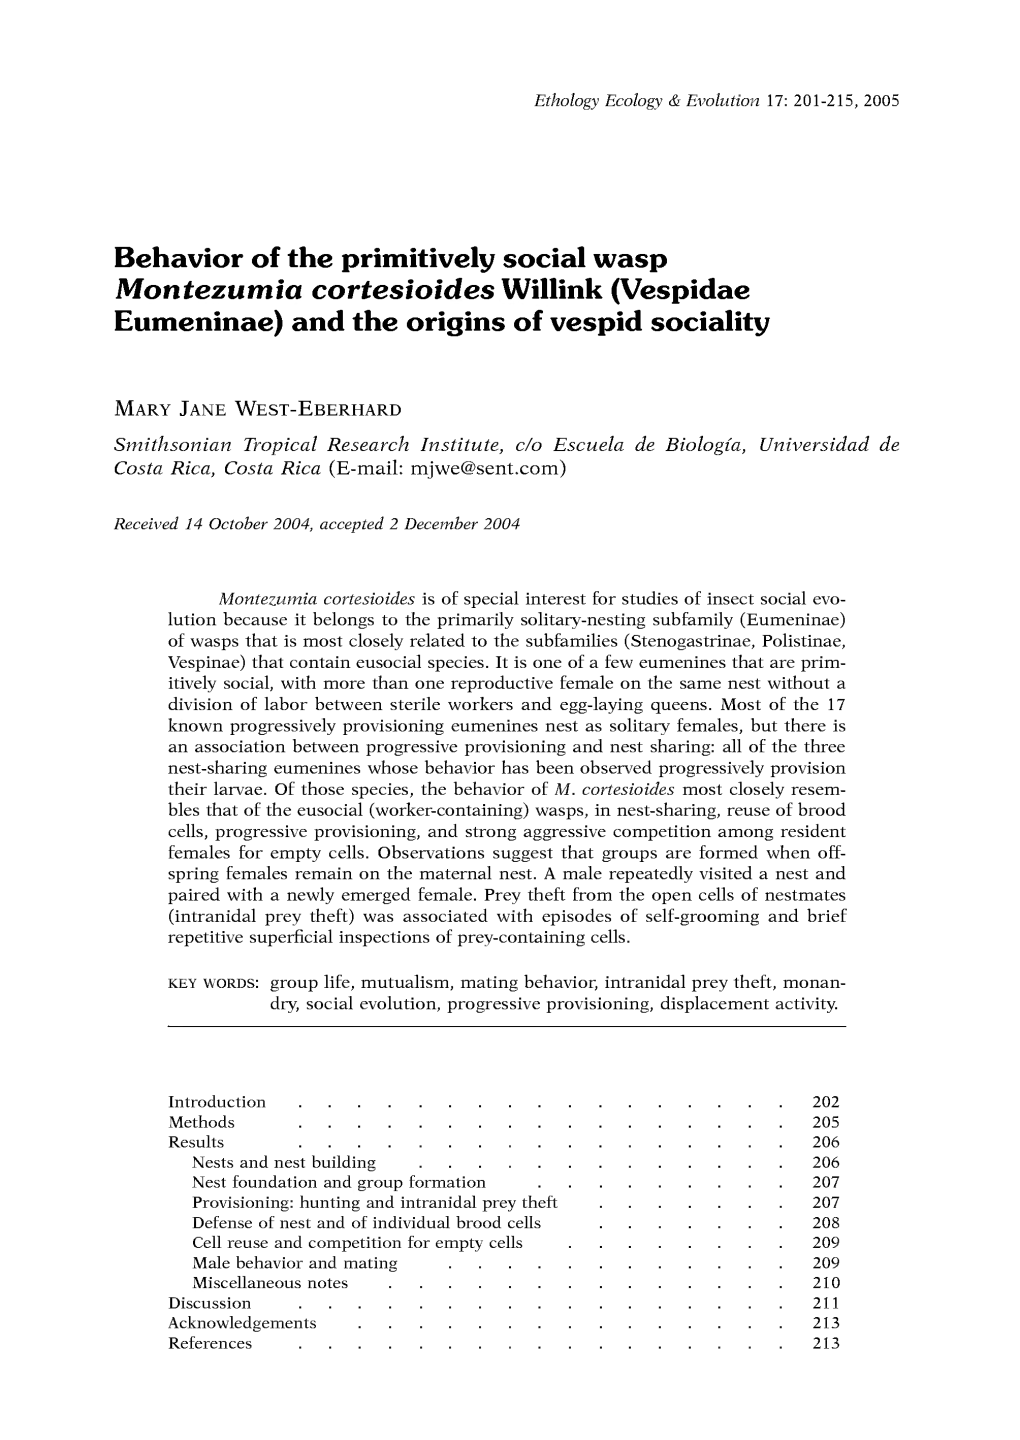 Behavior of the Primitively Social Wasp Montezumia Cortesioides Willink (Vespidae Eumeninae) and the Origins of Vespid Sociality